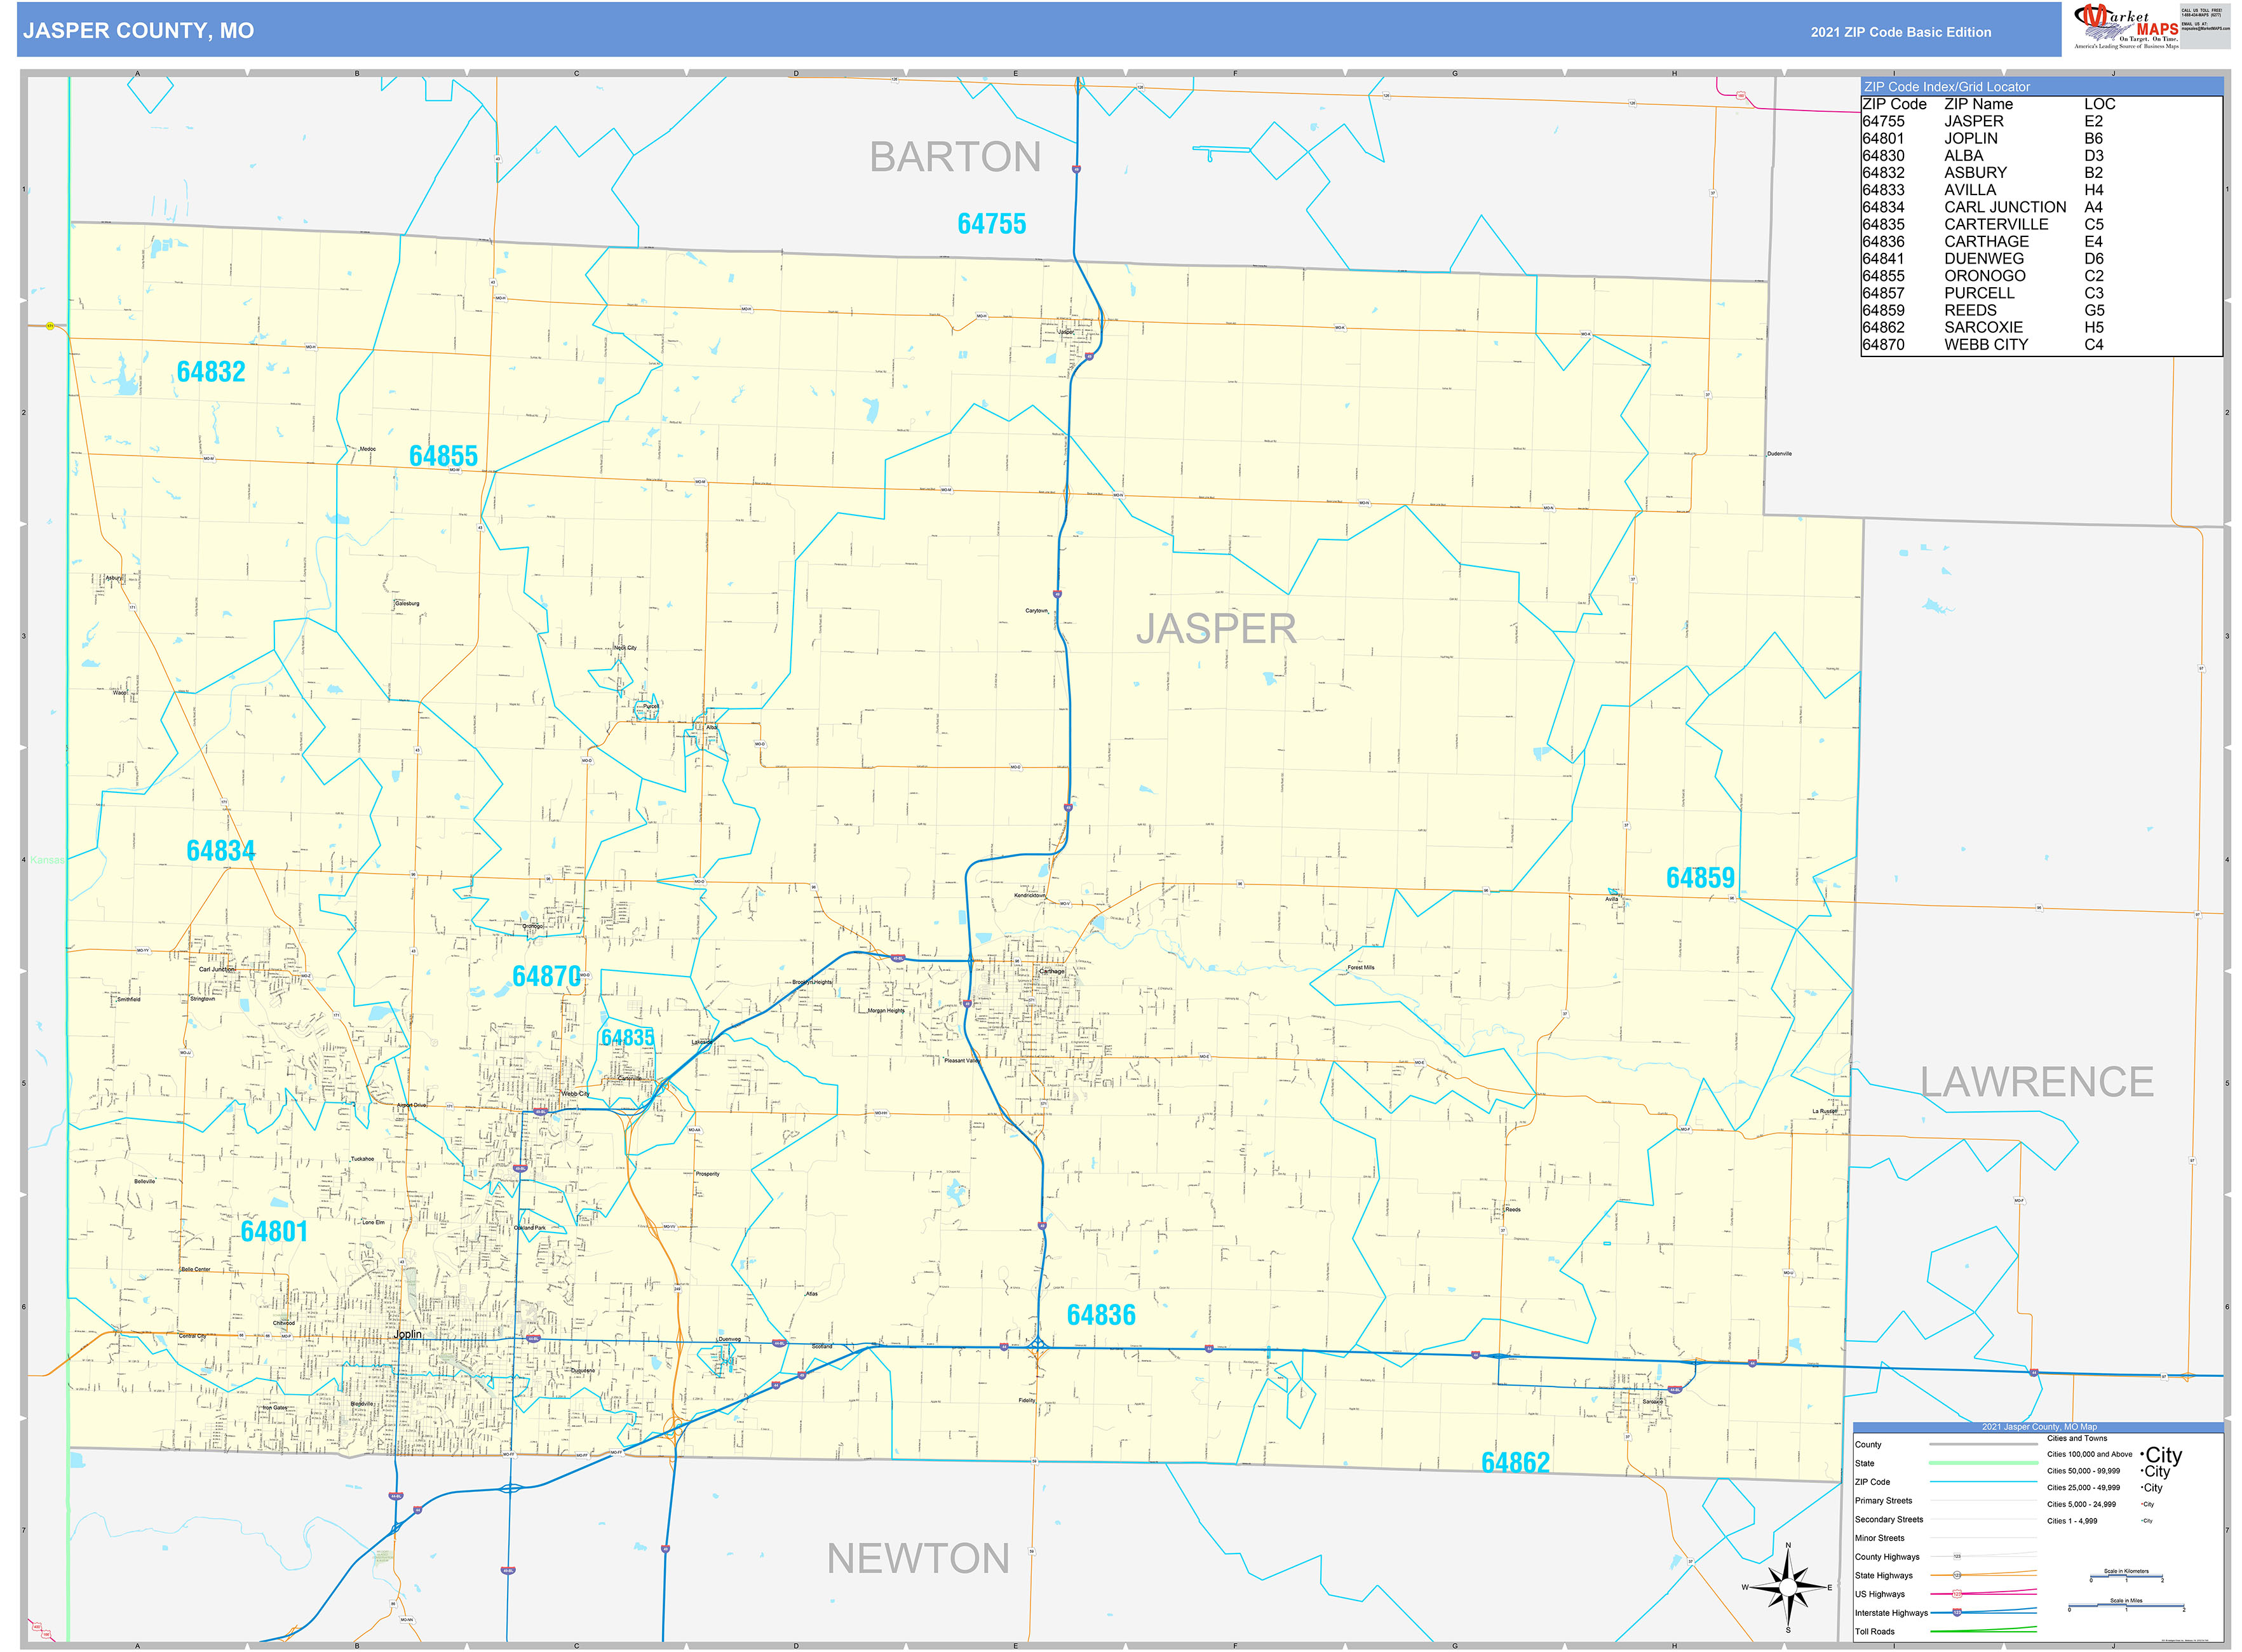 Jasper County, MO Zip Code Wall Map Basic Style by MarketMAPS